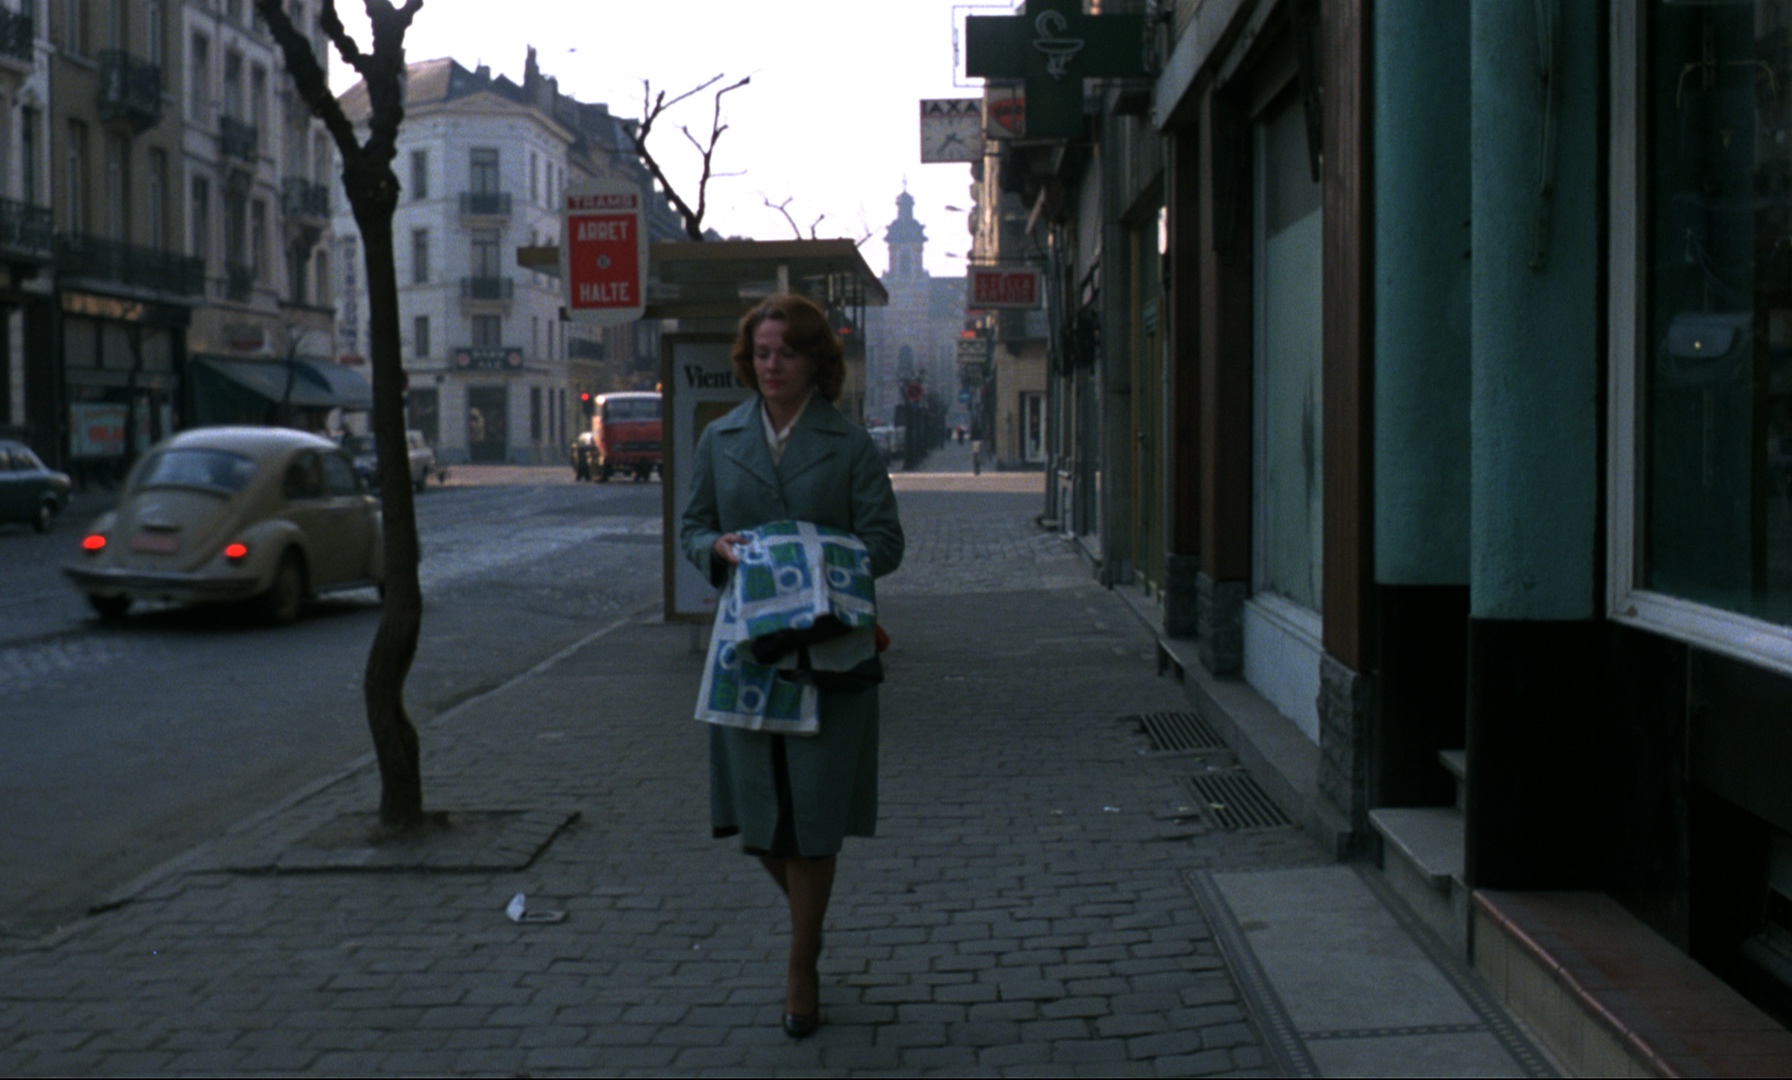 (5) Jeanne Dielman, 23 quai du Commerce, 1080 Bruxelles (Chantal Akerman, 1975)